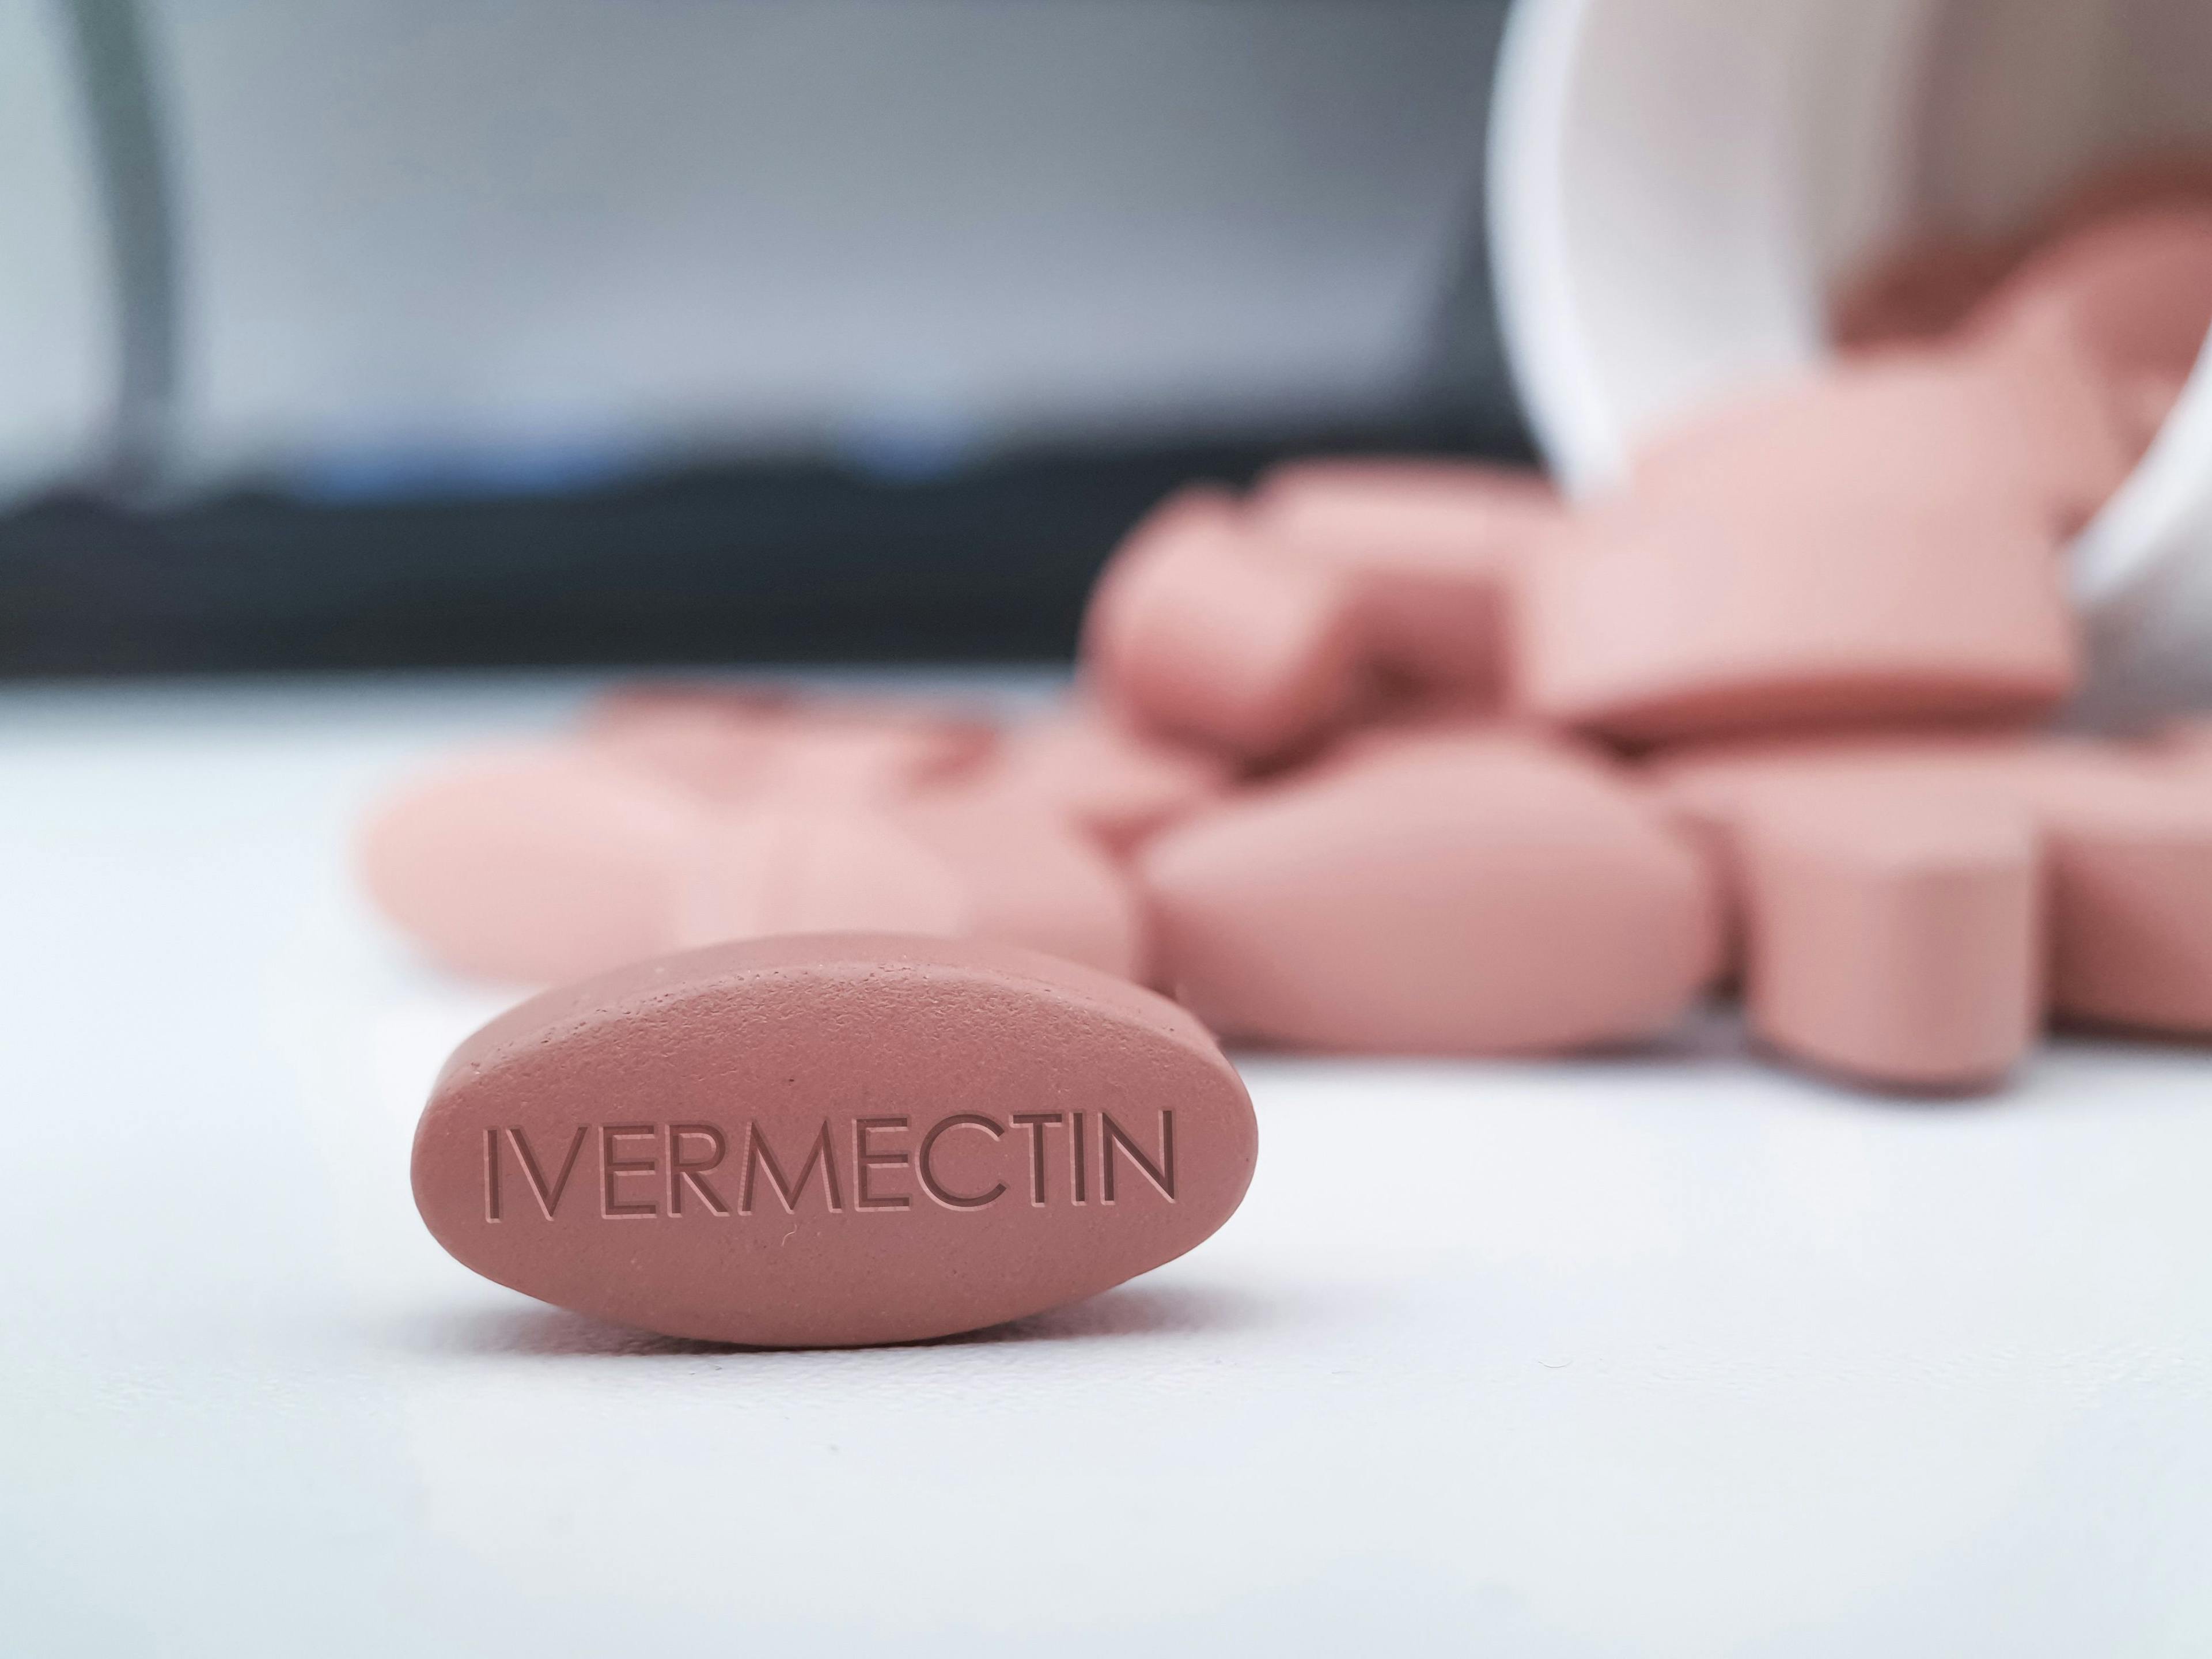 Ivermectin tablet medication | Image Credit: © Soni's - stock.adobe.com